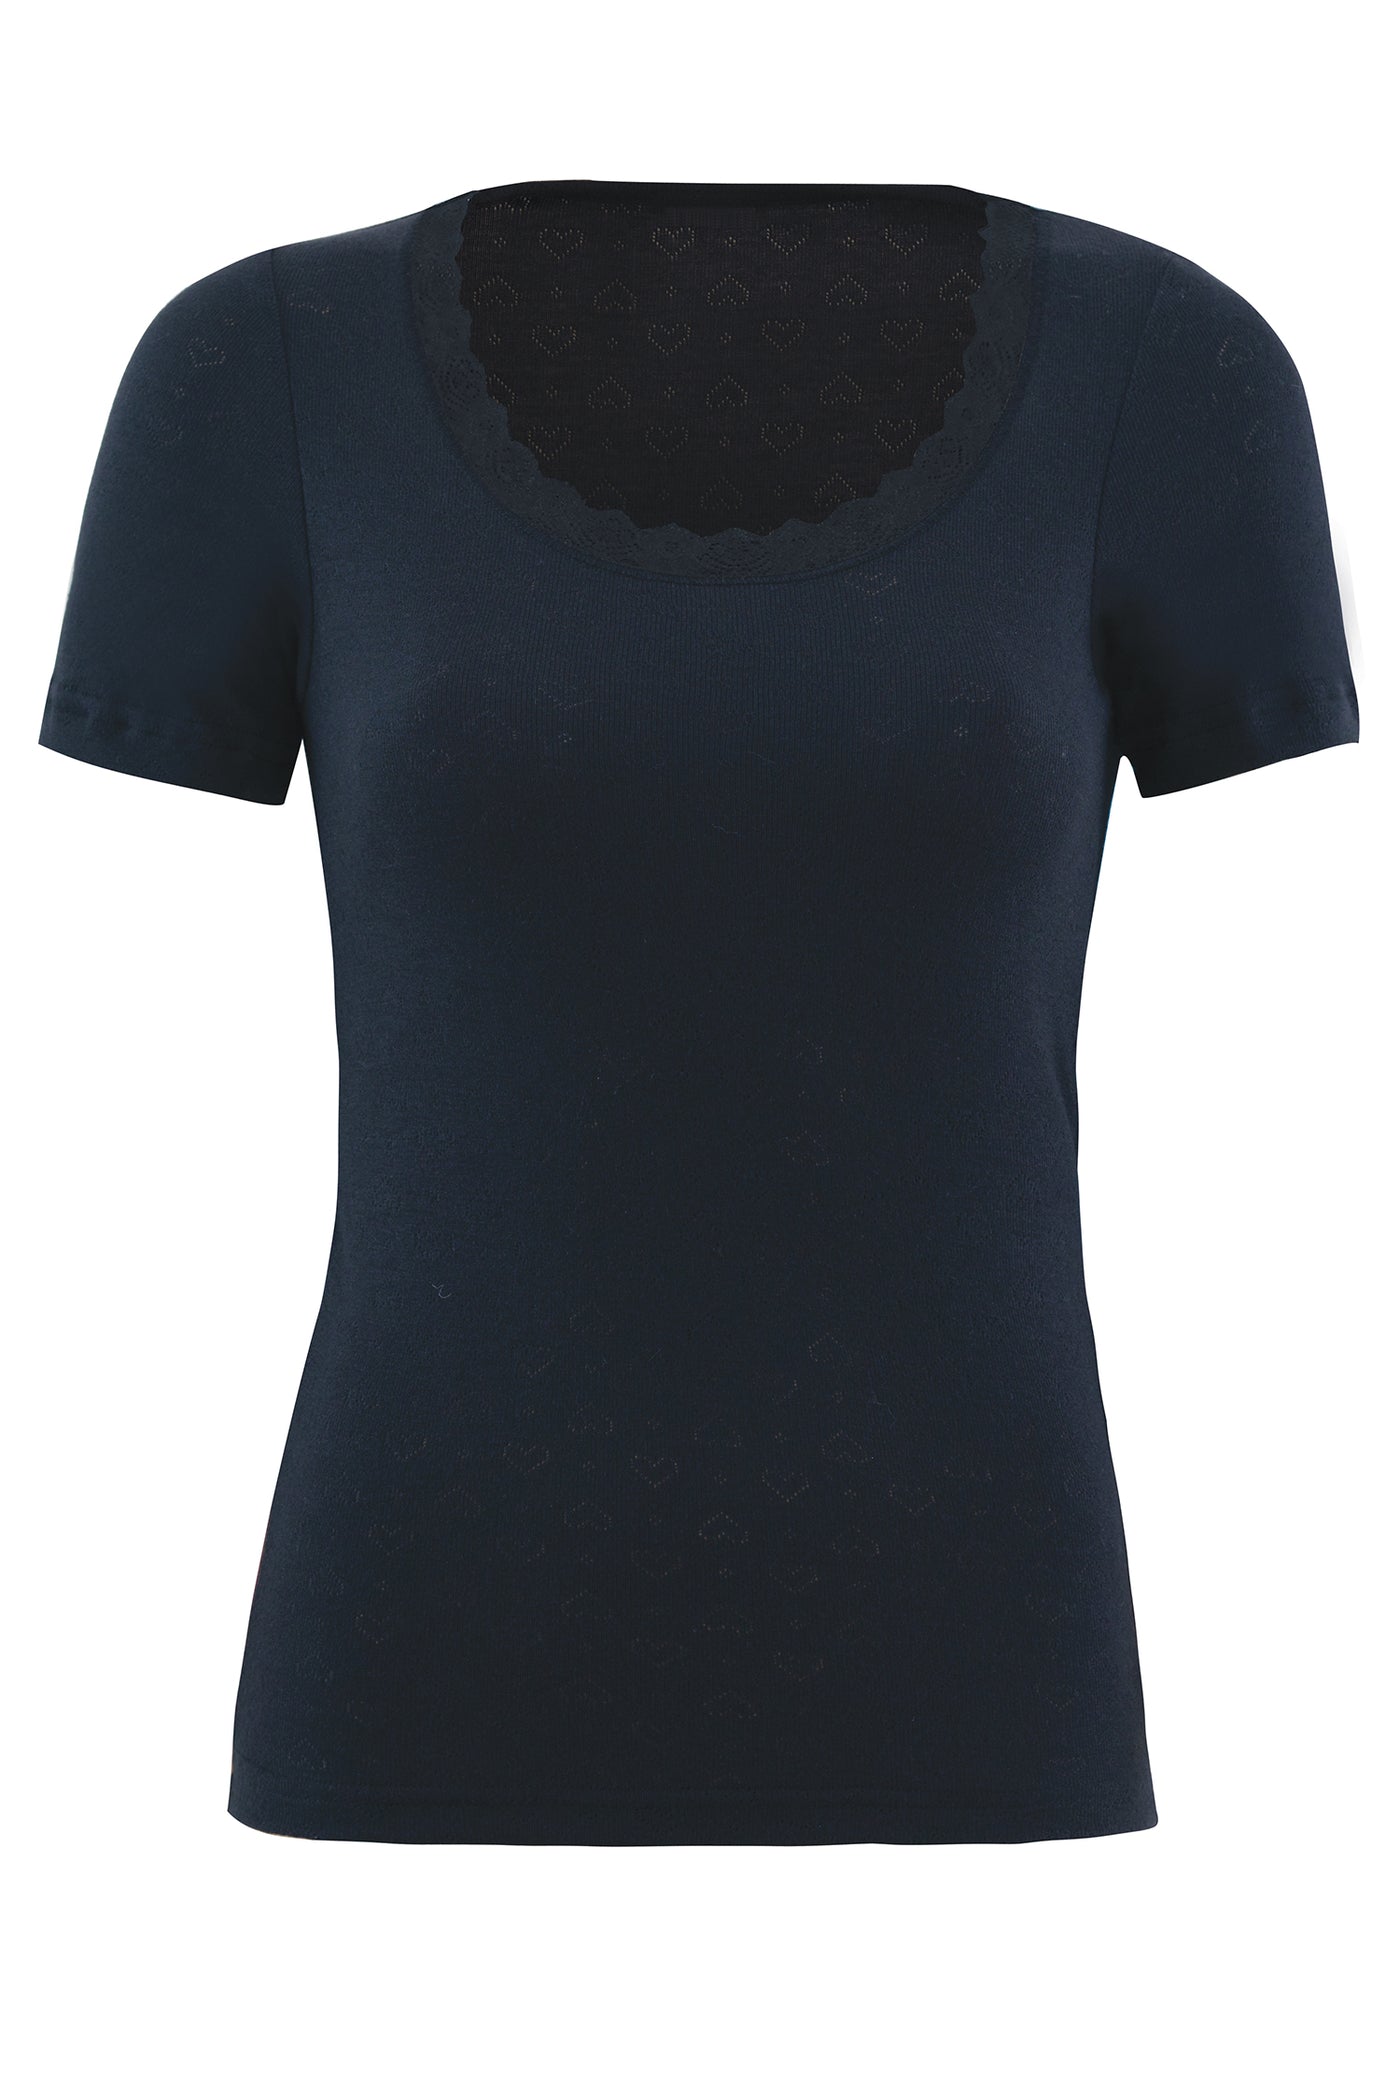 blackspade-Ladies' thermal jacquard t-shirt-1267, level-1-underwear-black